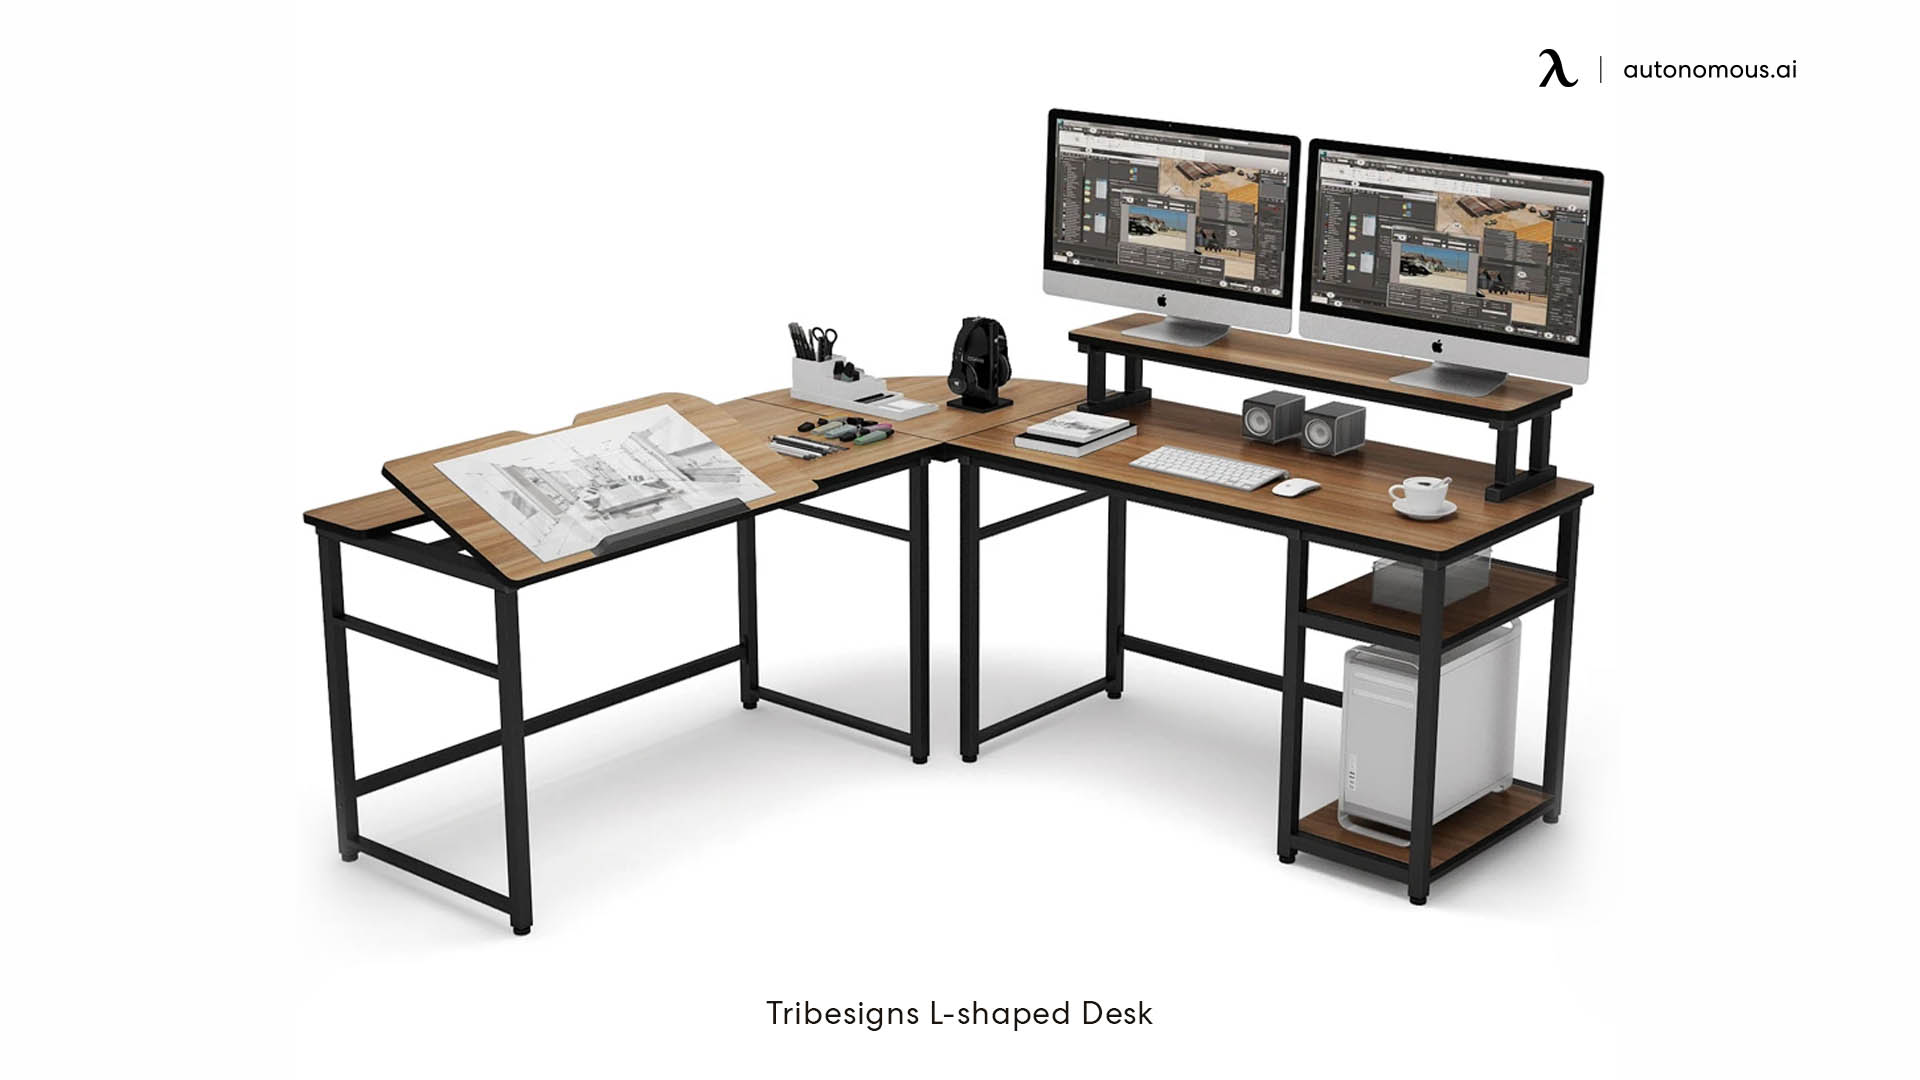 Tribesigns L-Shaped Desk